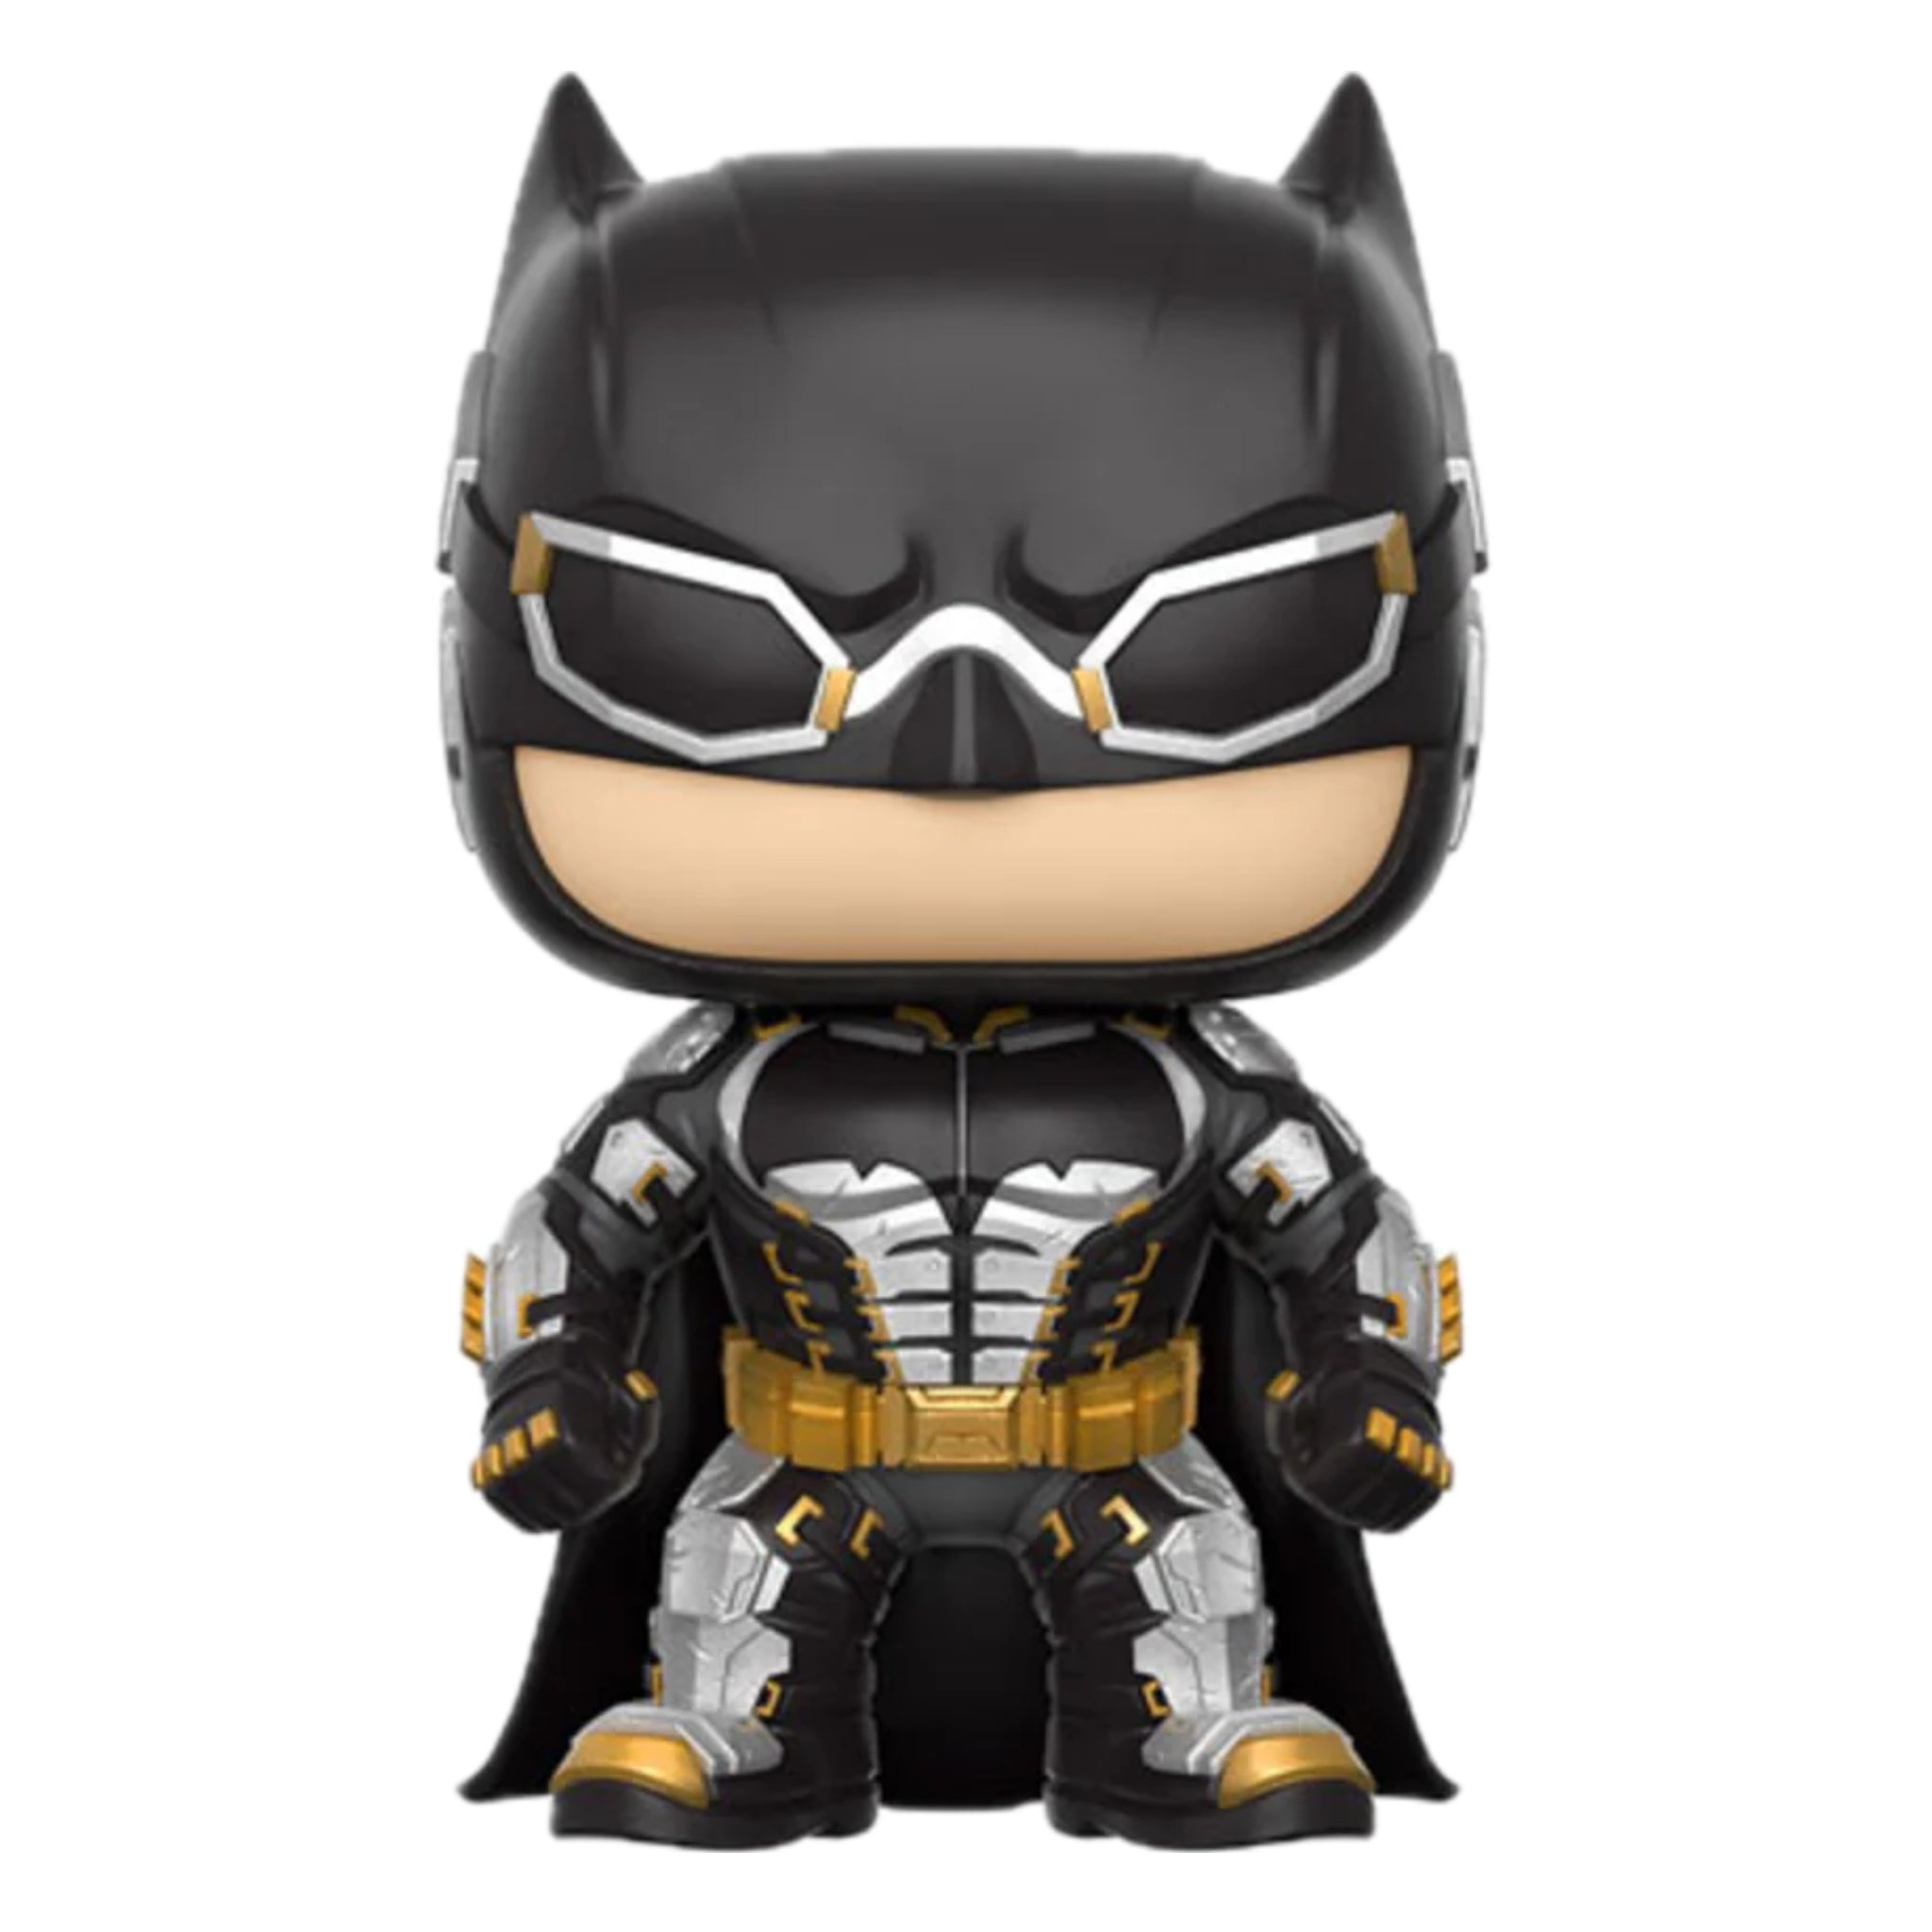 Batman (Justice League) Funko Pop!